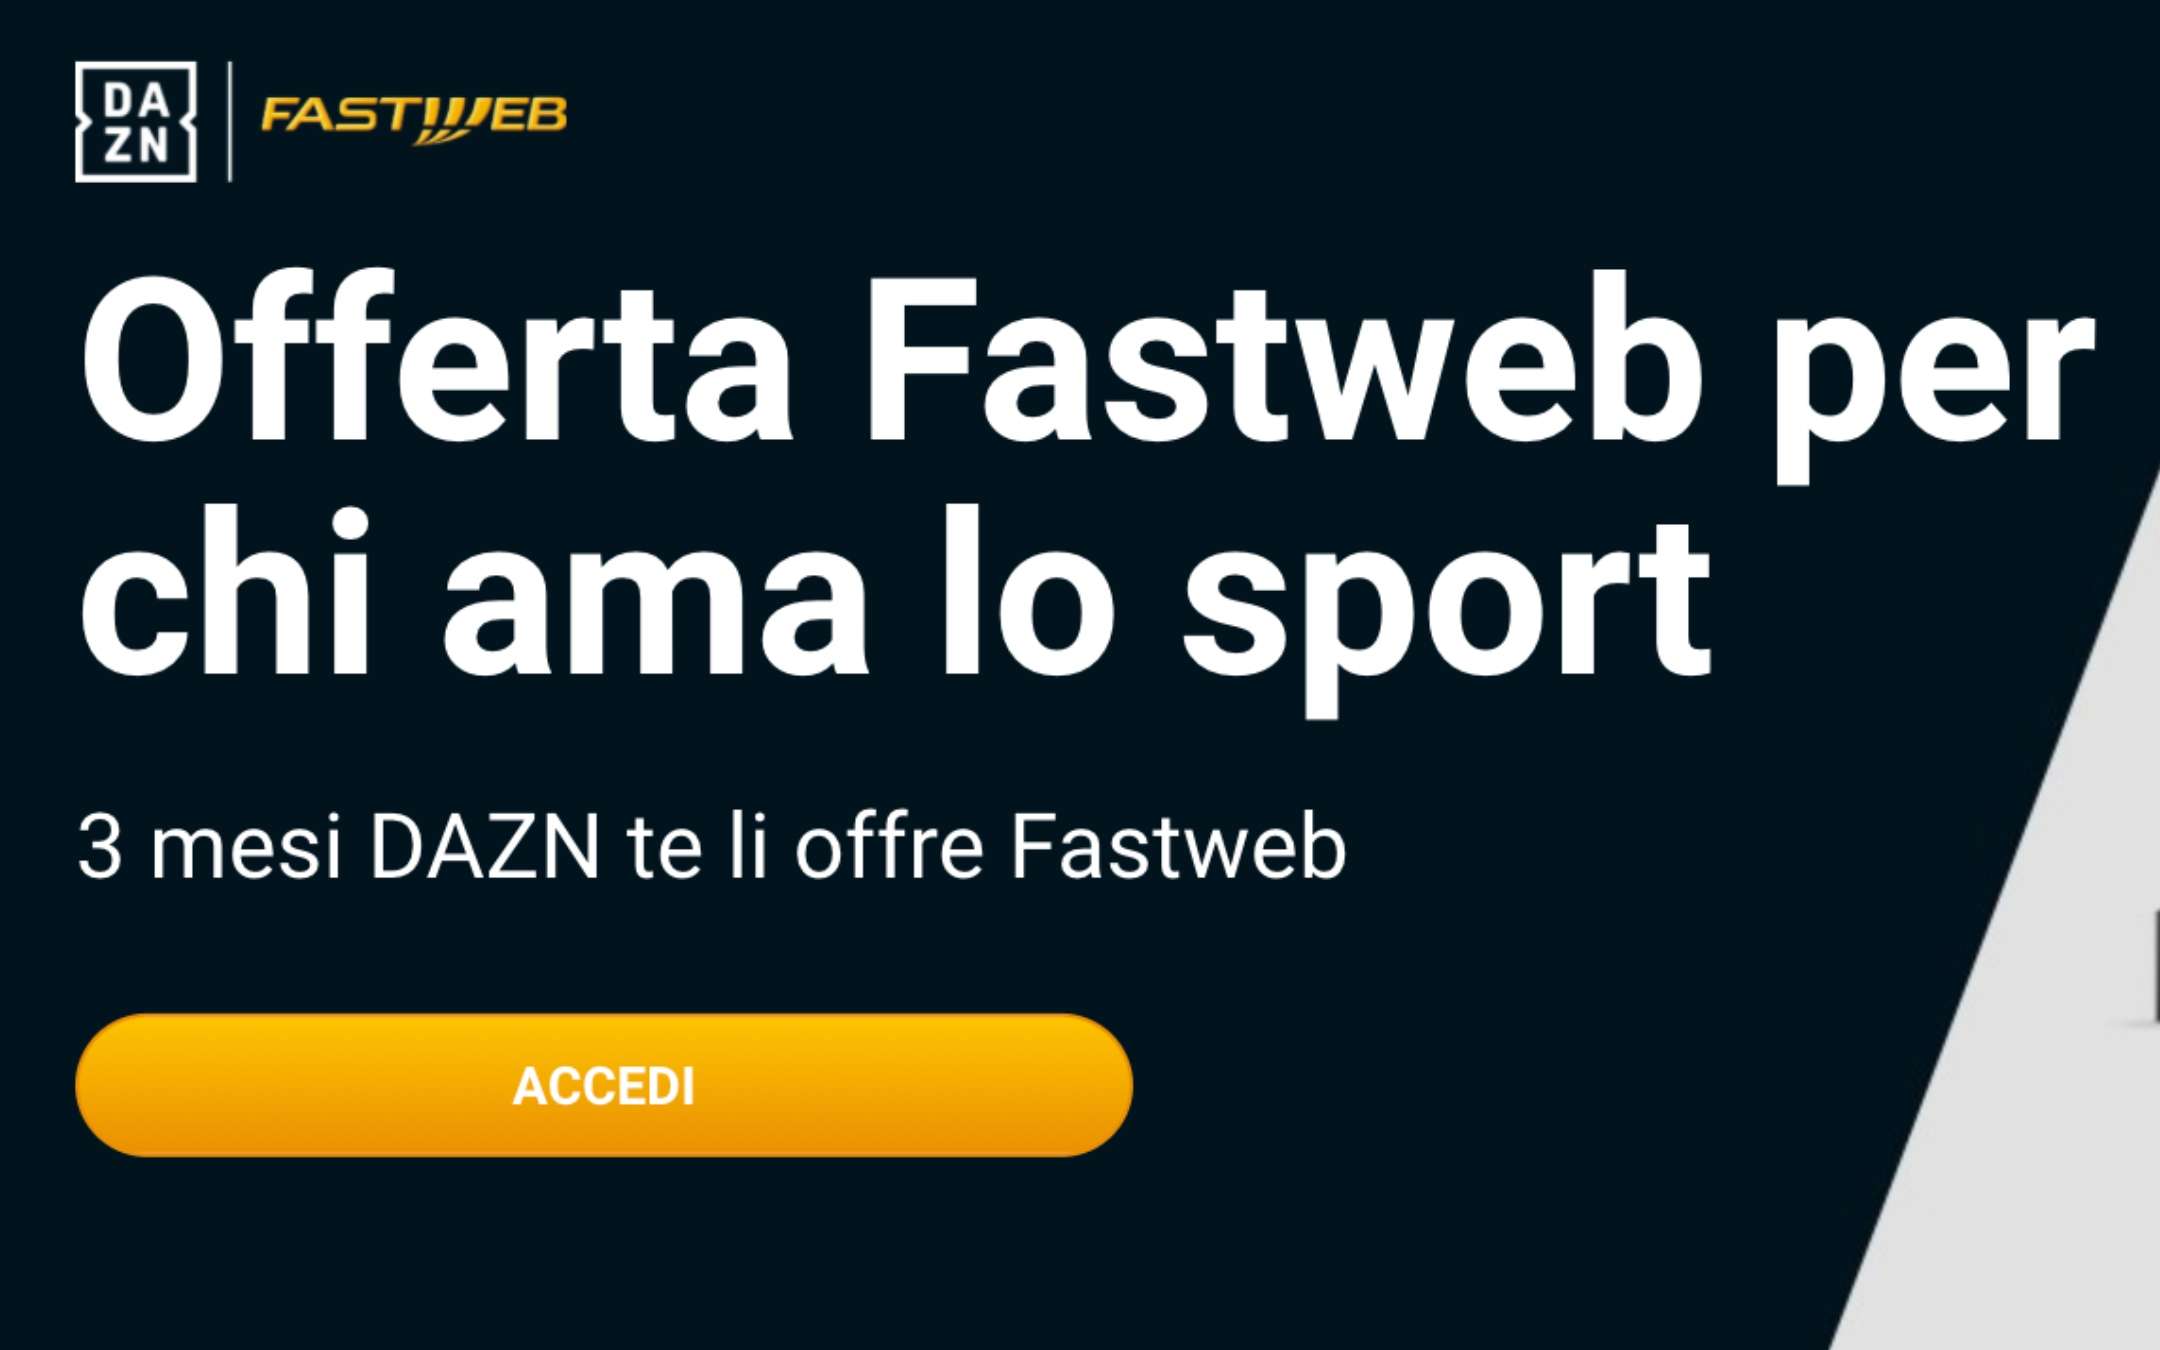 LiveFast: Fastweb offre lo streming di DAZN per 3 mesi gratis